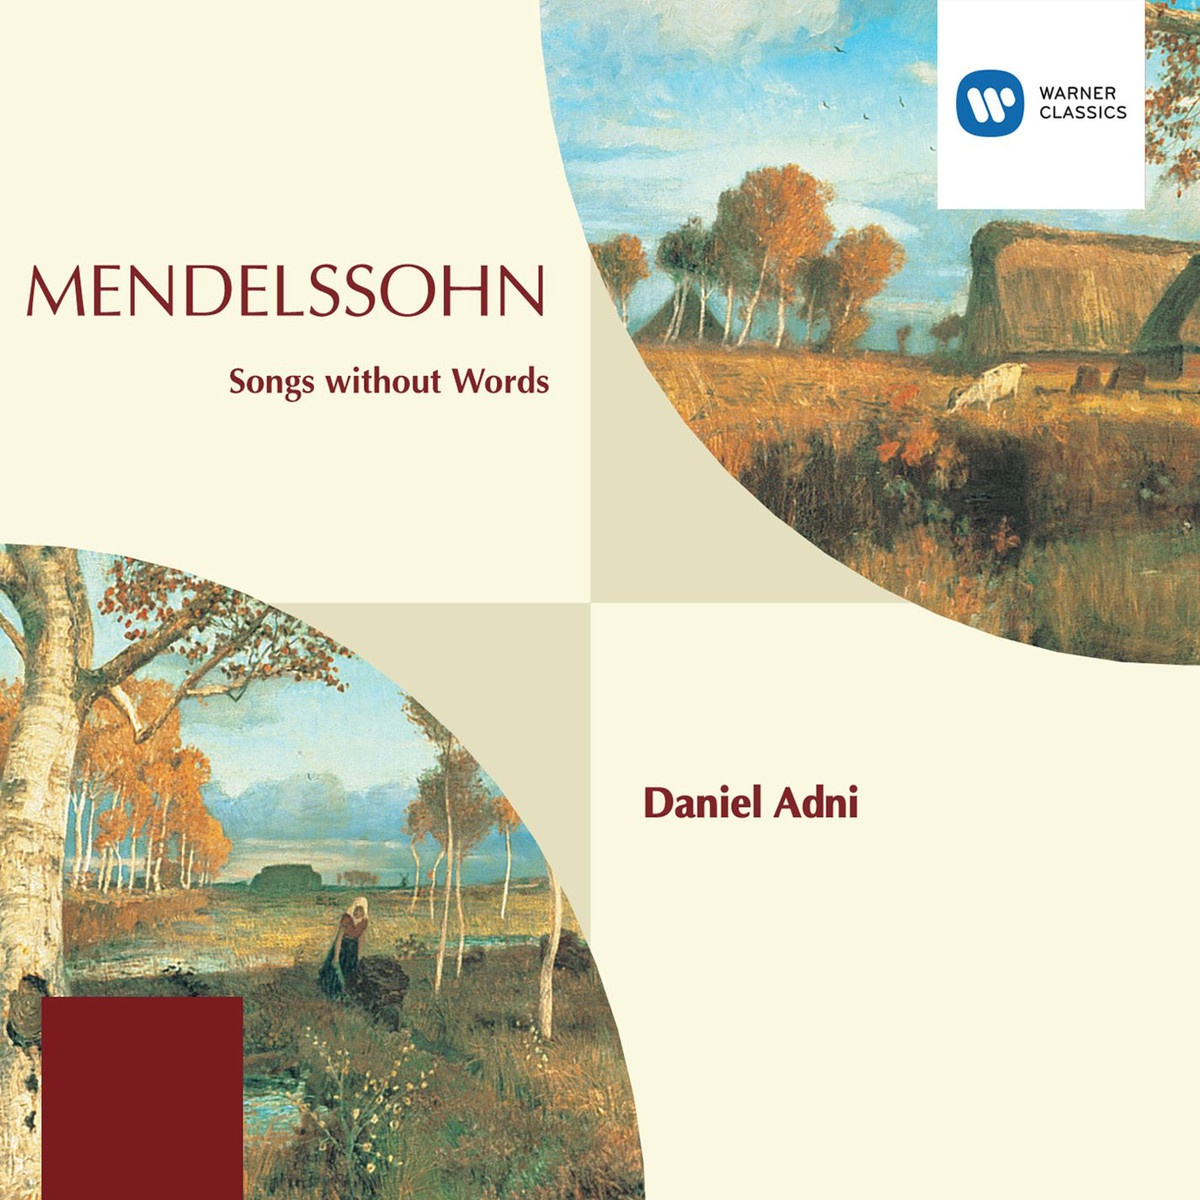 Songs without Words (1996 Digital Remaster): Andante sostenuto in E major, Op. 30 No. 3